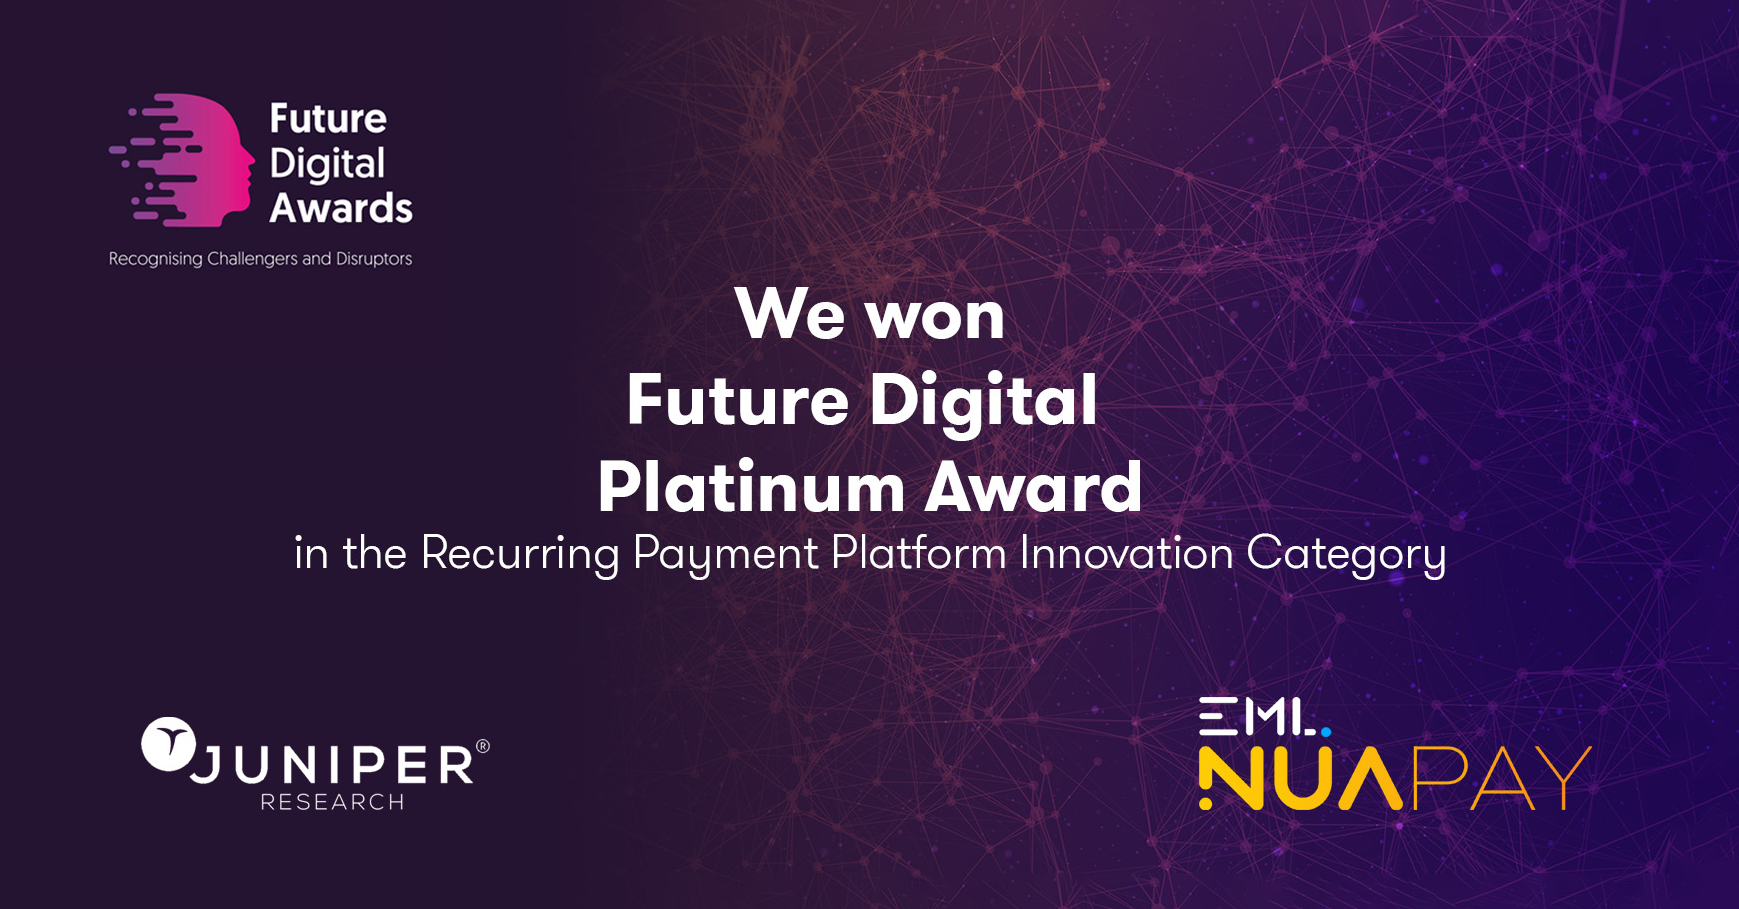 Nuapay Wins Future Digital Platinum Award For Recurring Payment Platform Innovation